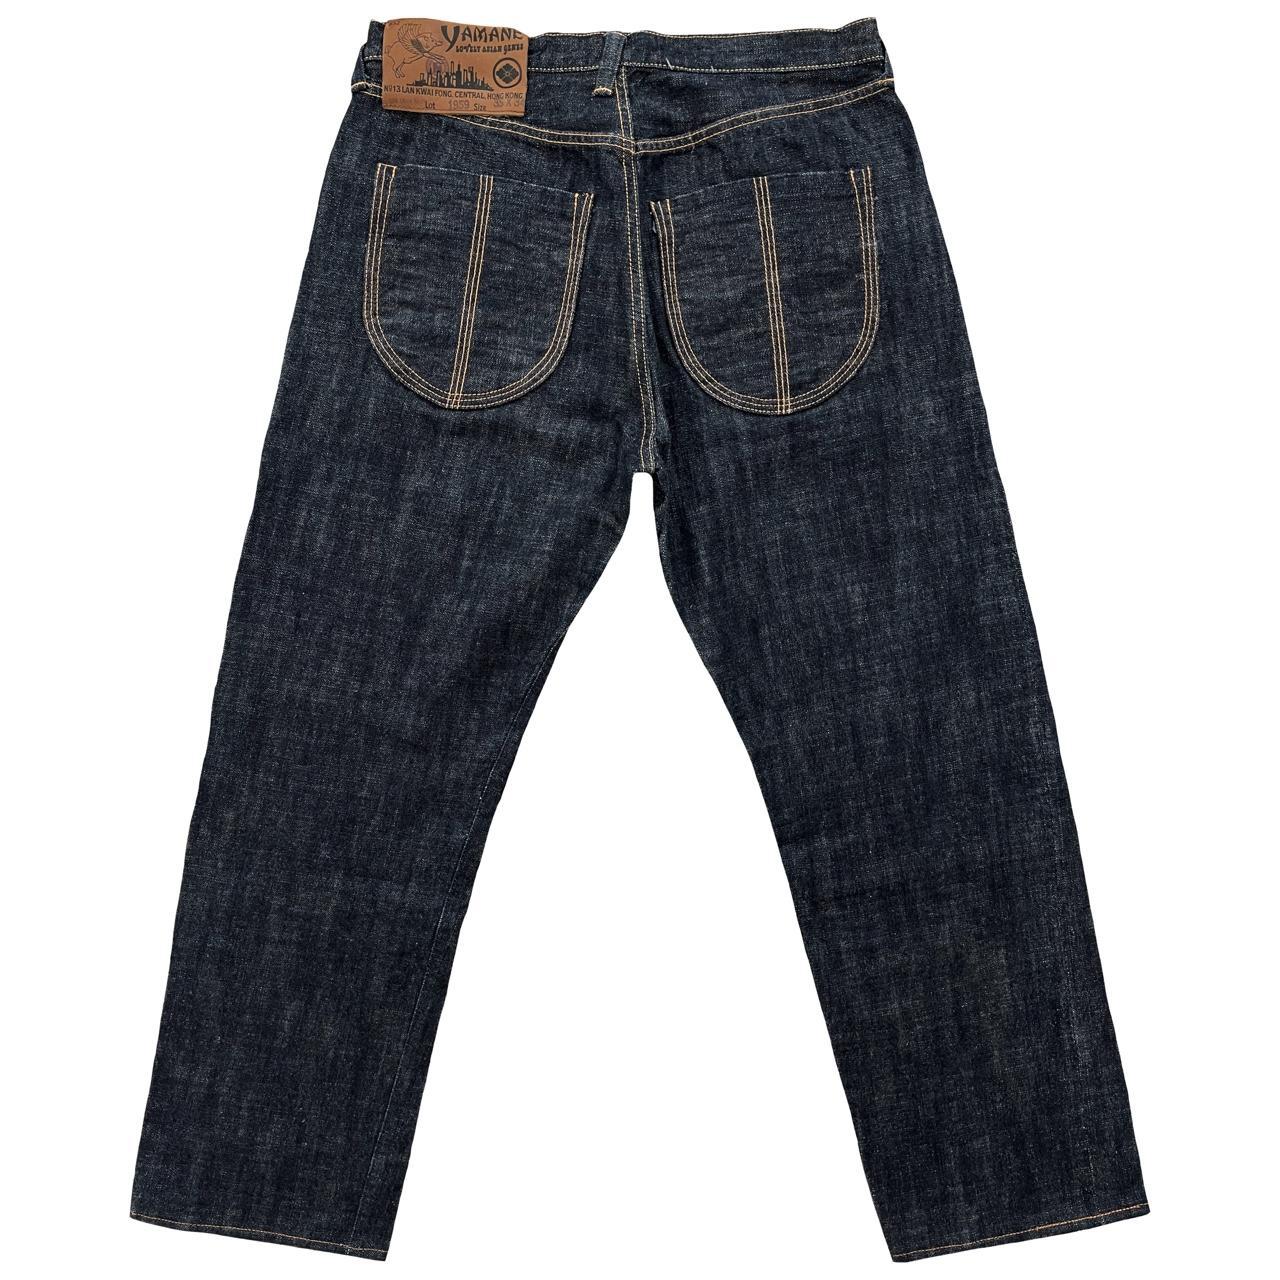 Evisu Yamane Jeans Evisu Yamane Selvedge jeans.... - Depop